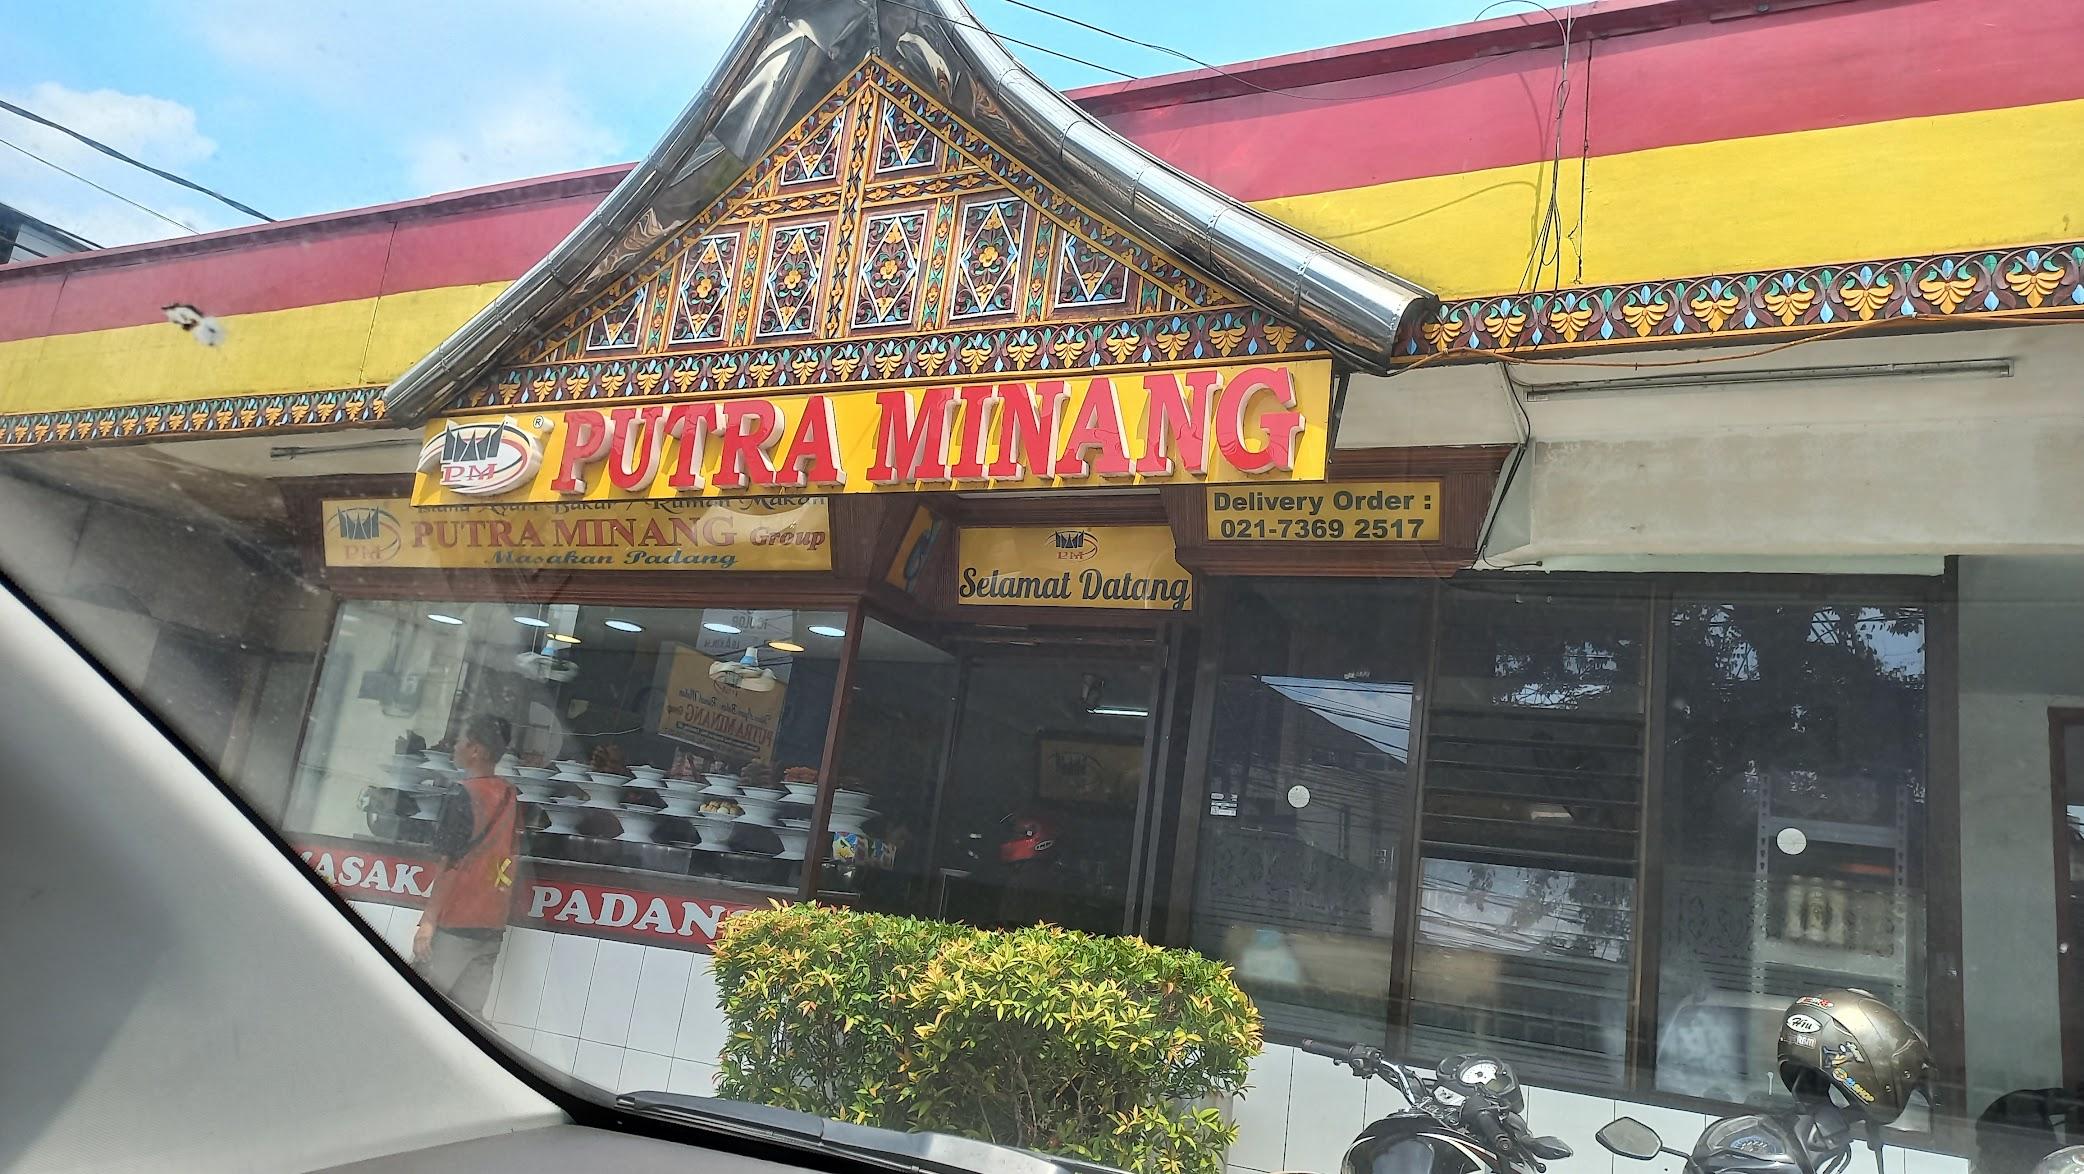 Putra Minang Restaurant review